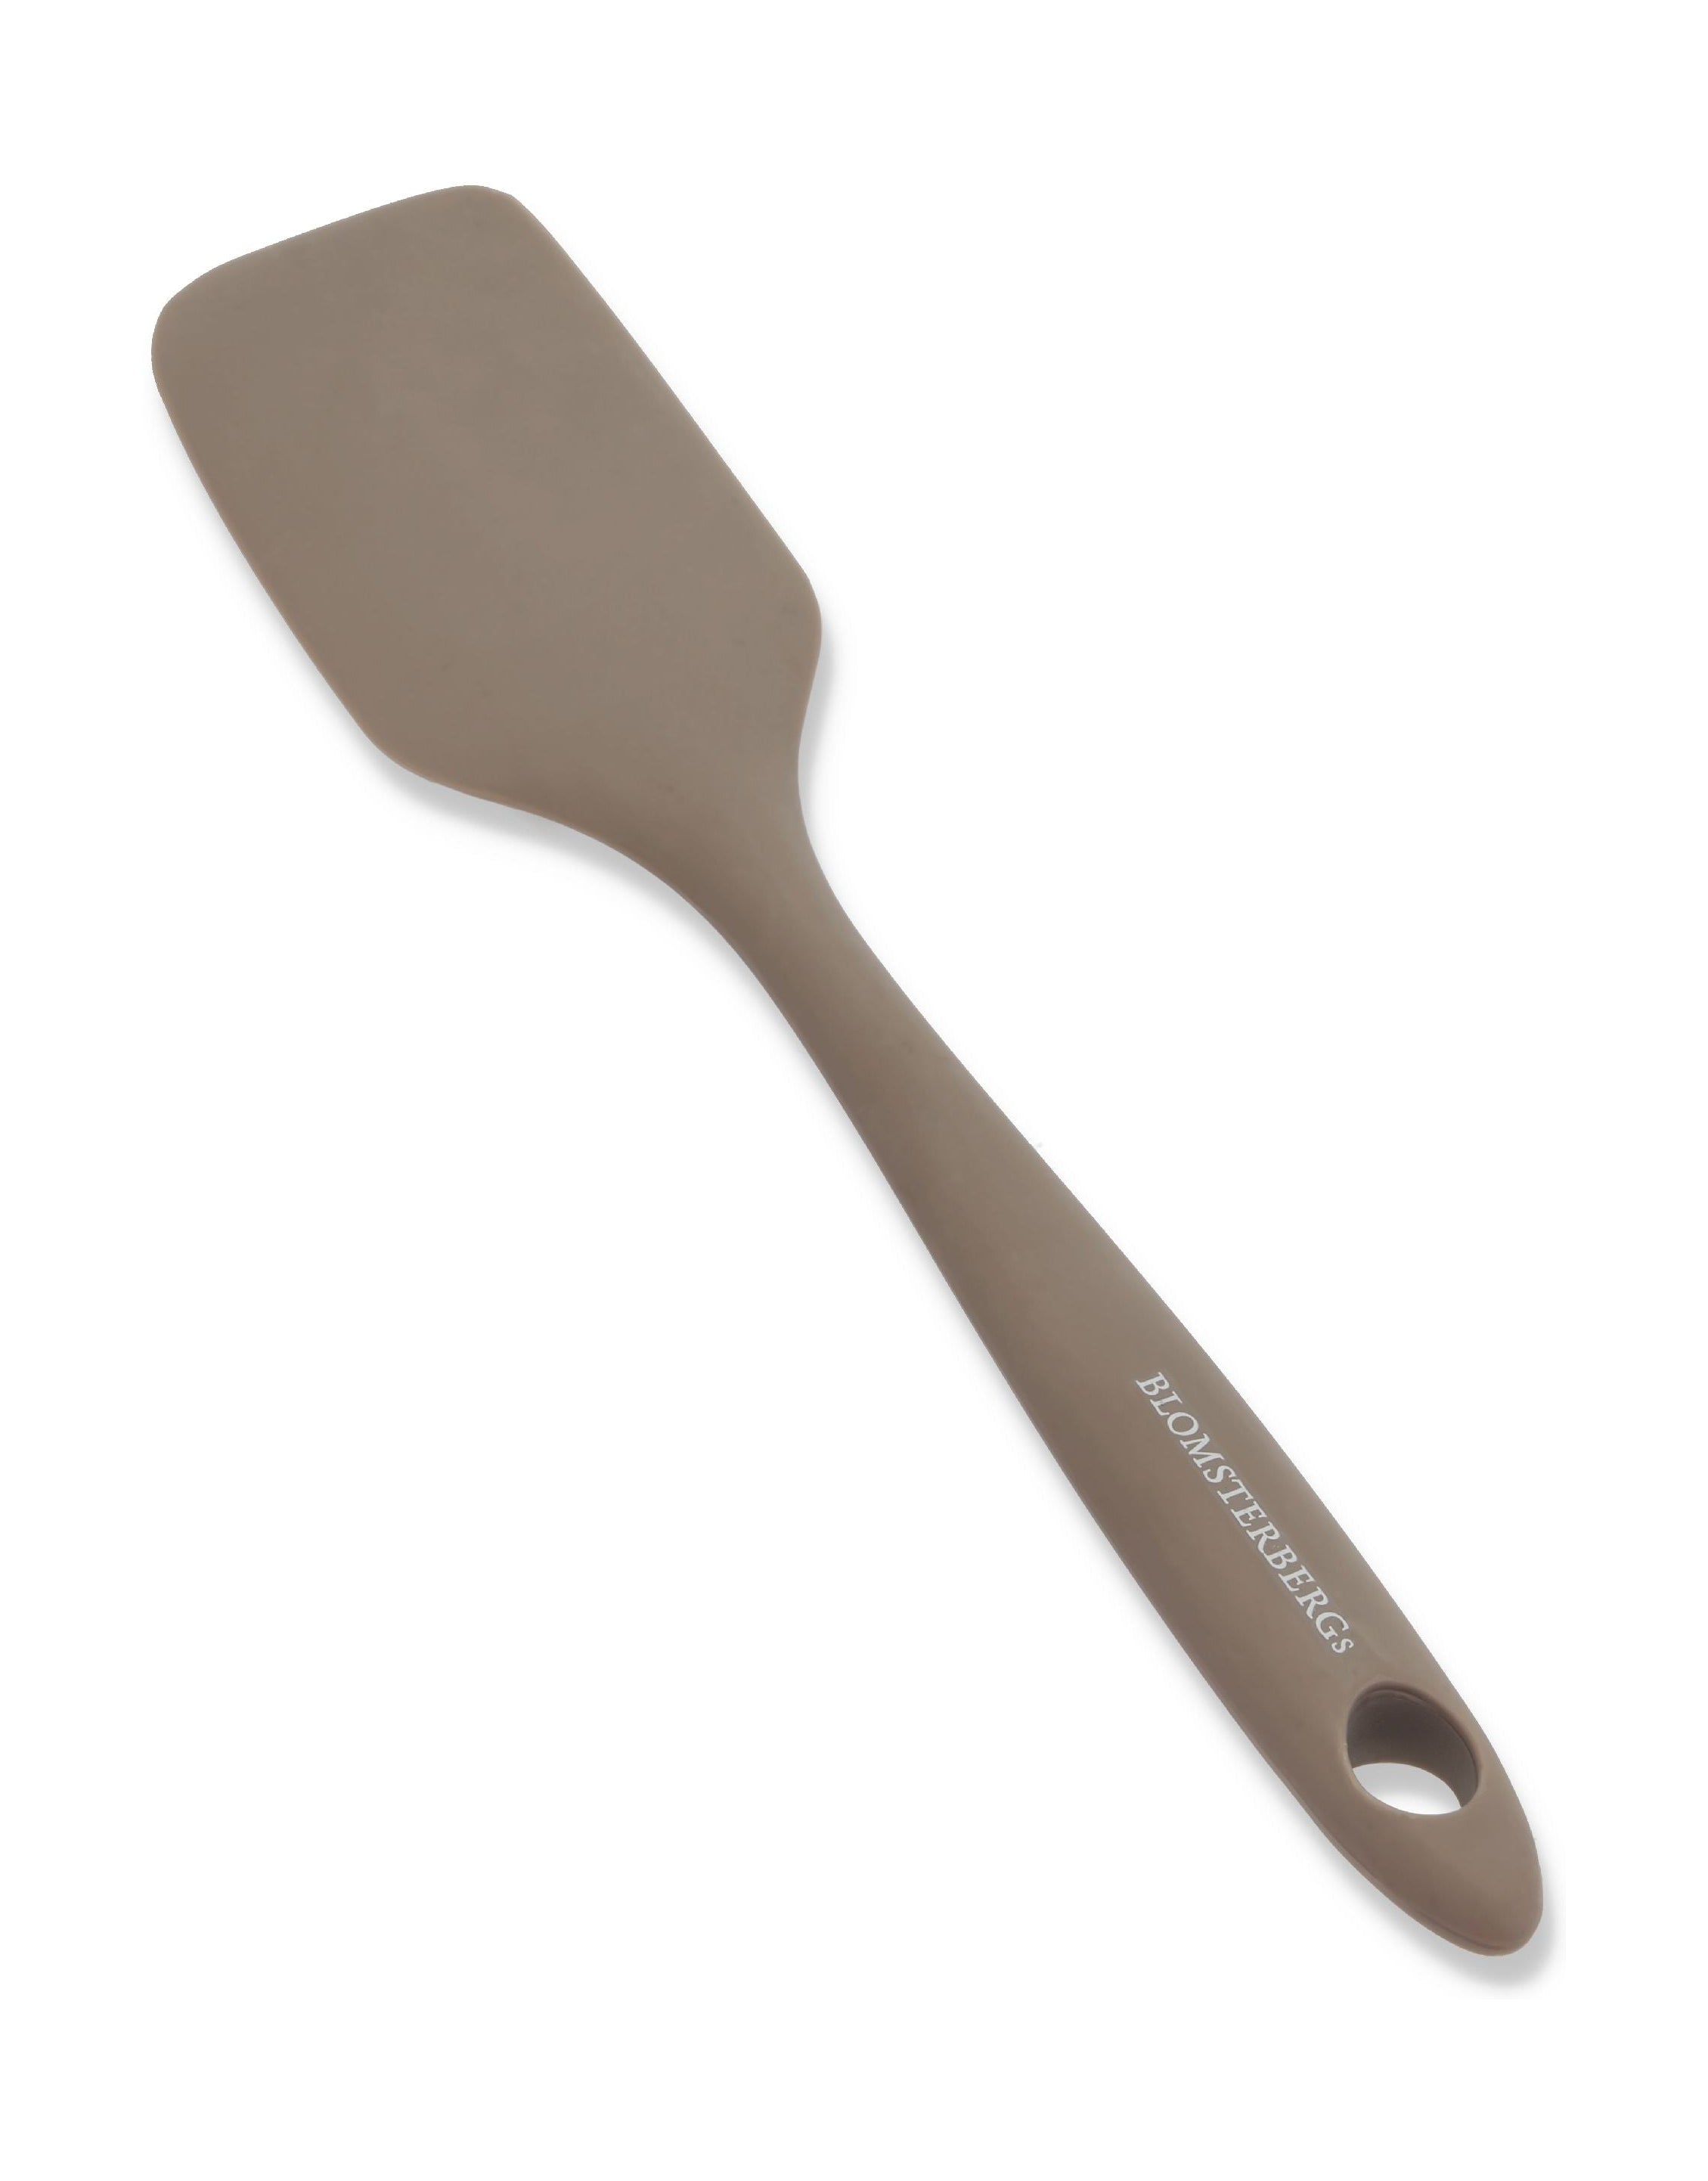 Blomsterbergs spatula latte, 27 cm